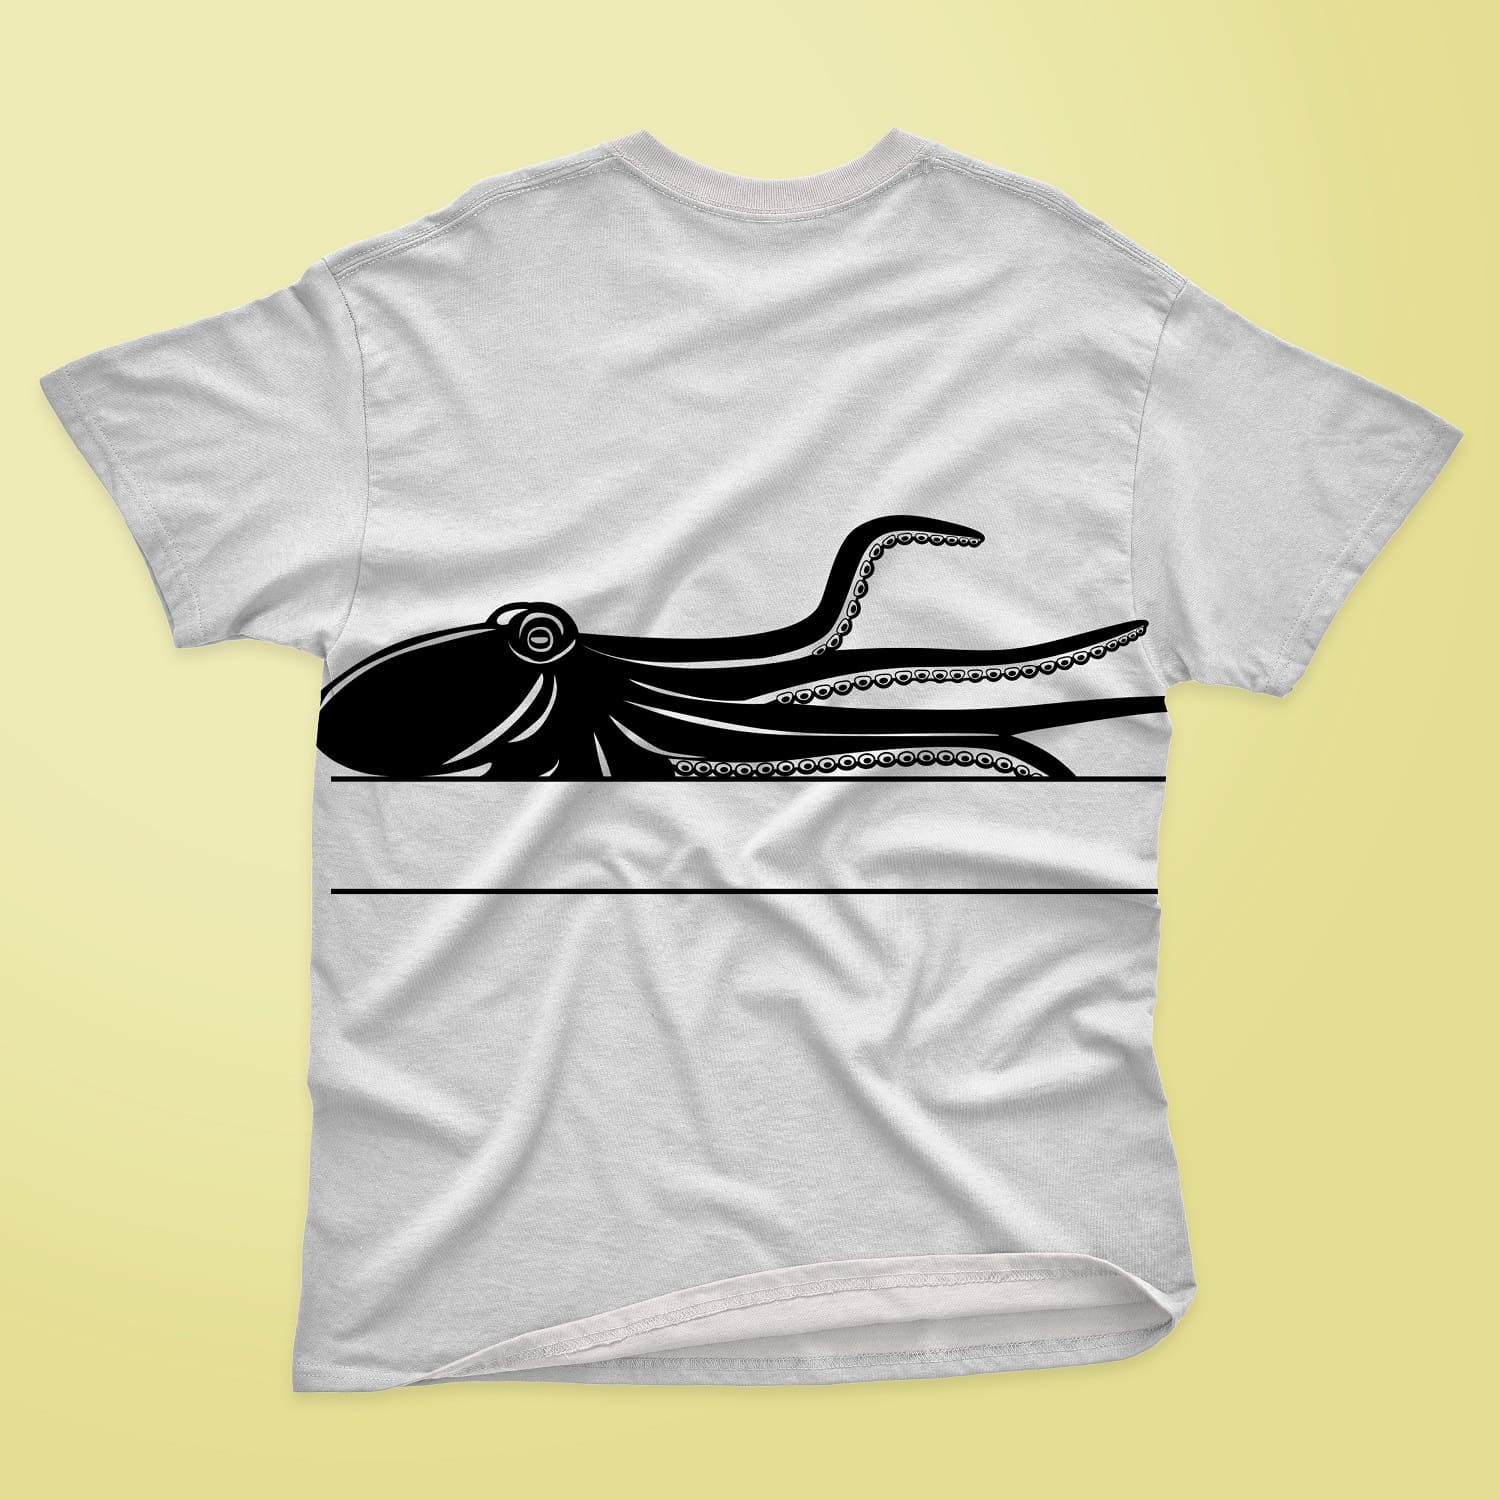 T-shirt with lying black Monogram Octopus.